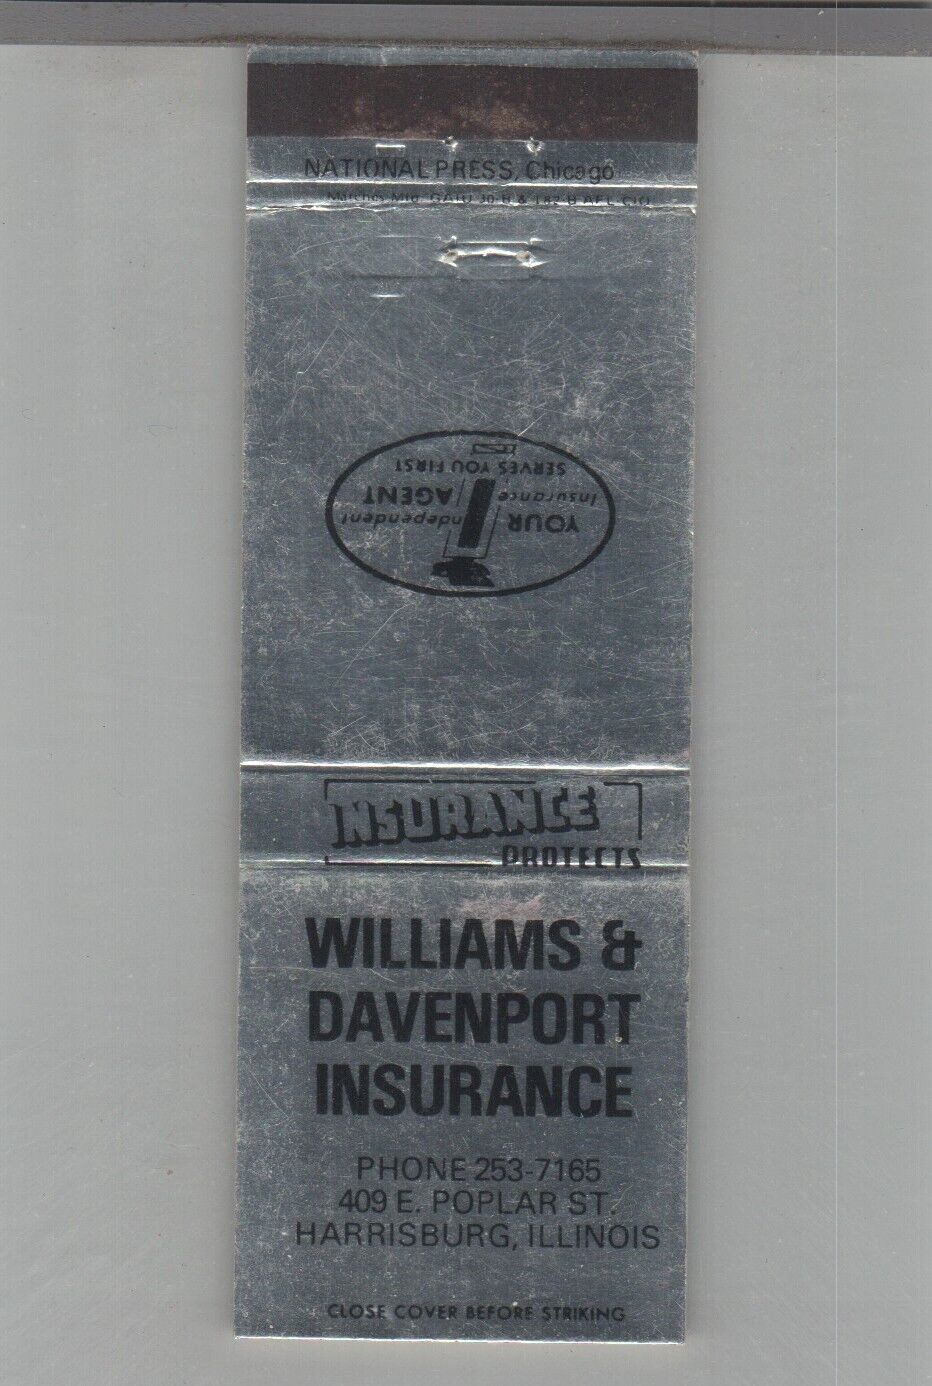 Matchbook Cover Insurance Williams & Davenport Agency Harrisburg, IL